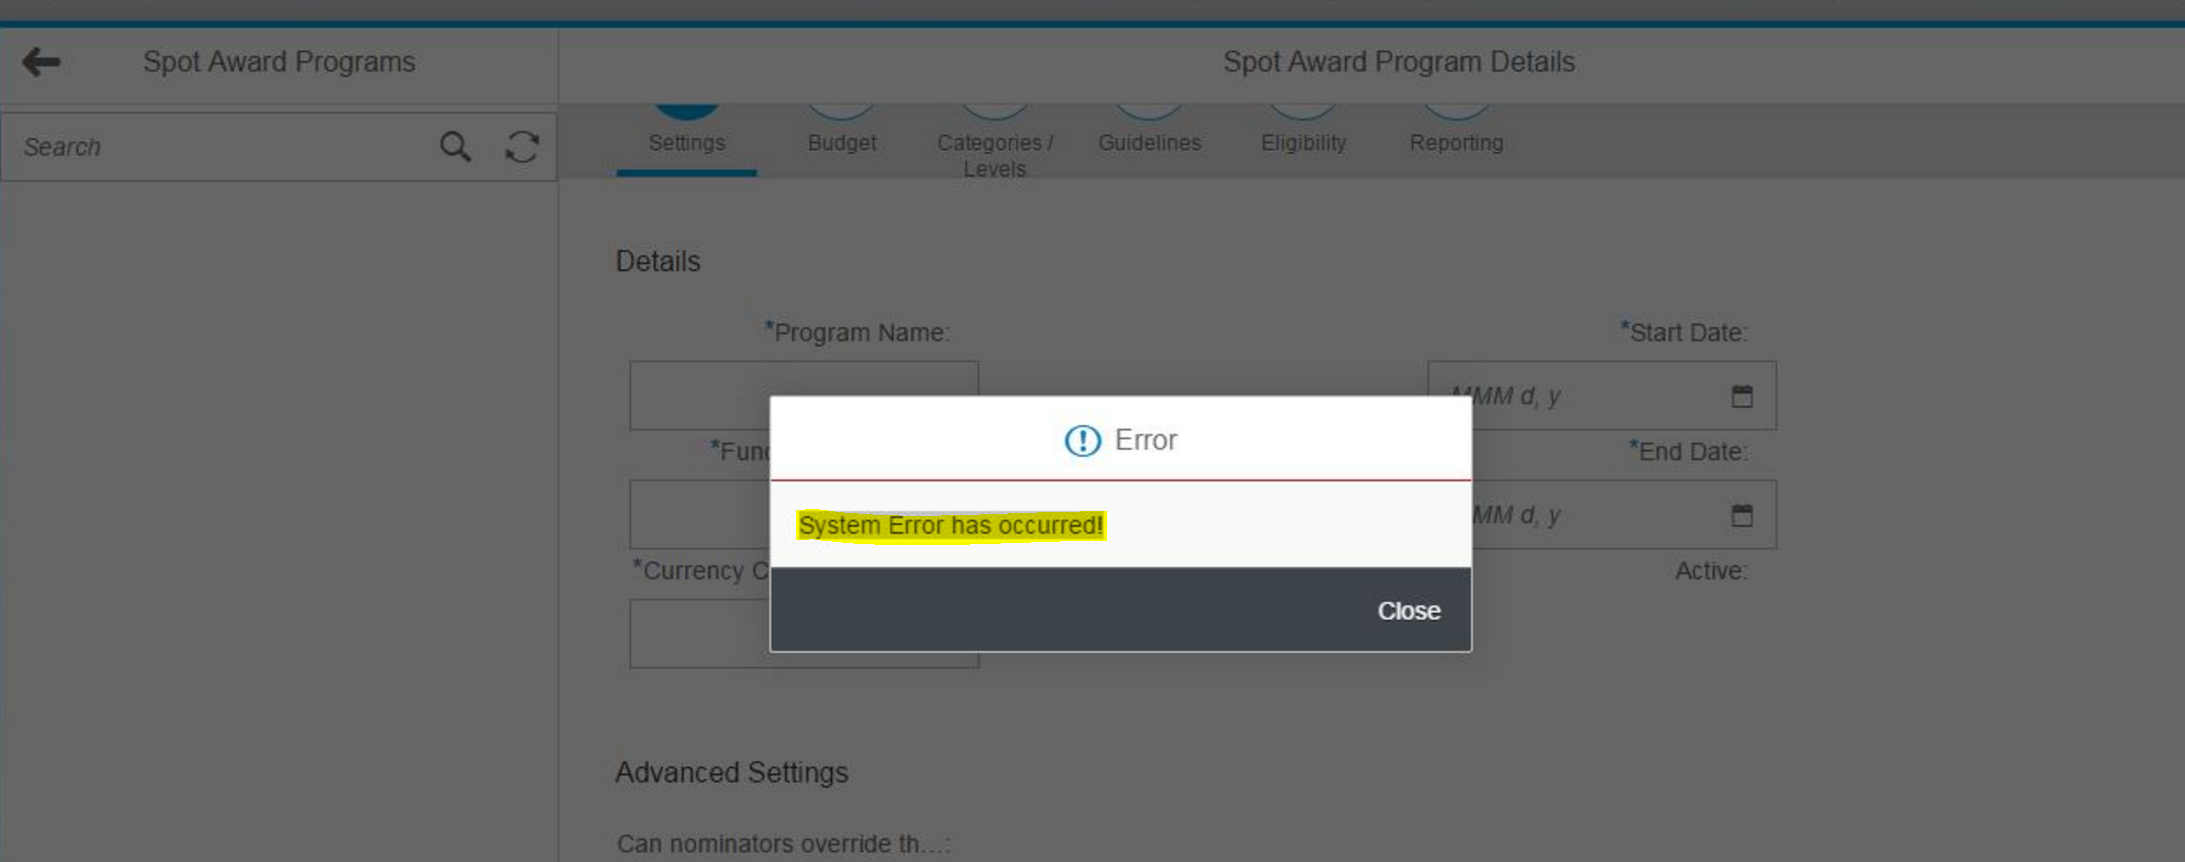 spot awards error.PNG